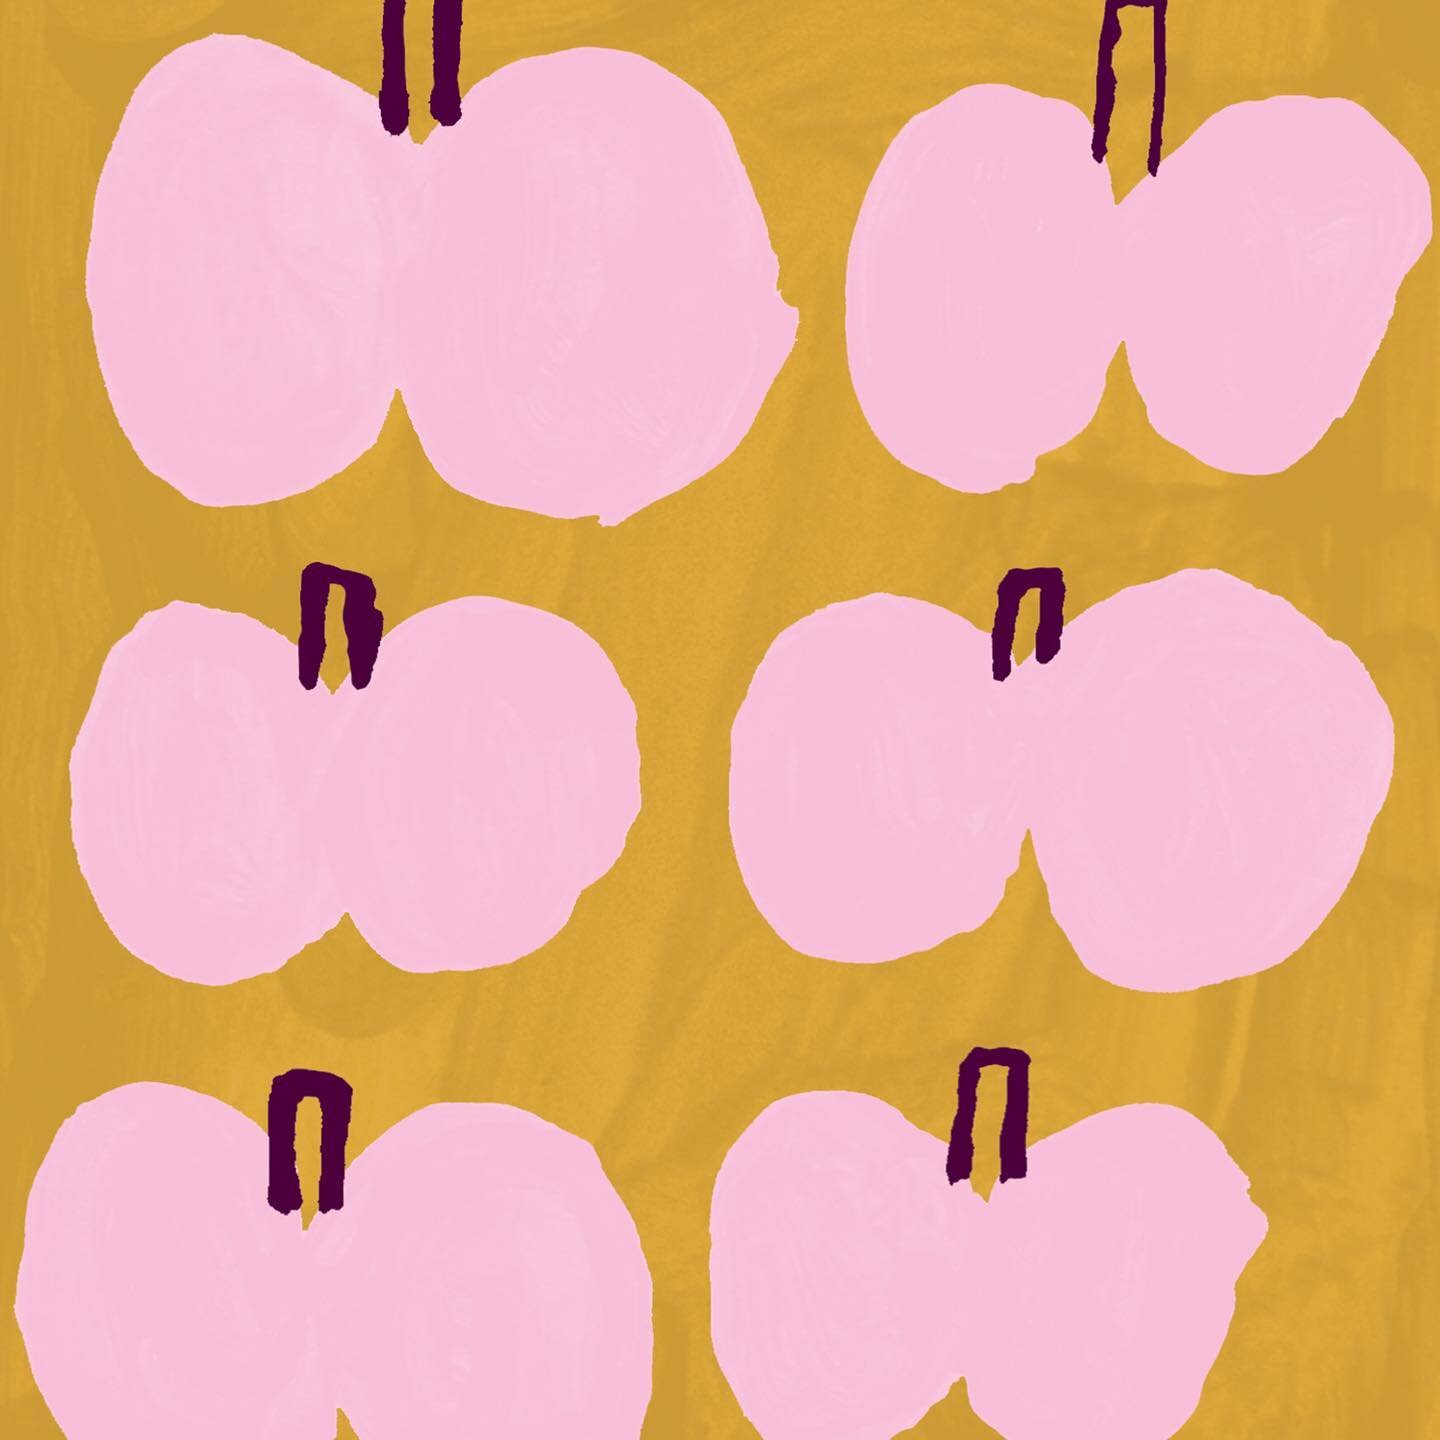 Hmm&hellip; apples or butts?? (●･̆⍛･̆●)
.
.
.
#illustration #design #apples #painting #print #shop #artprint